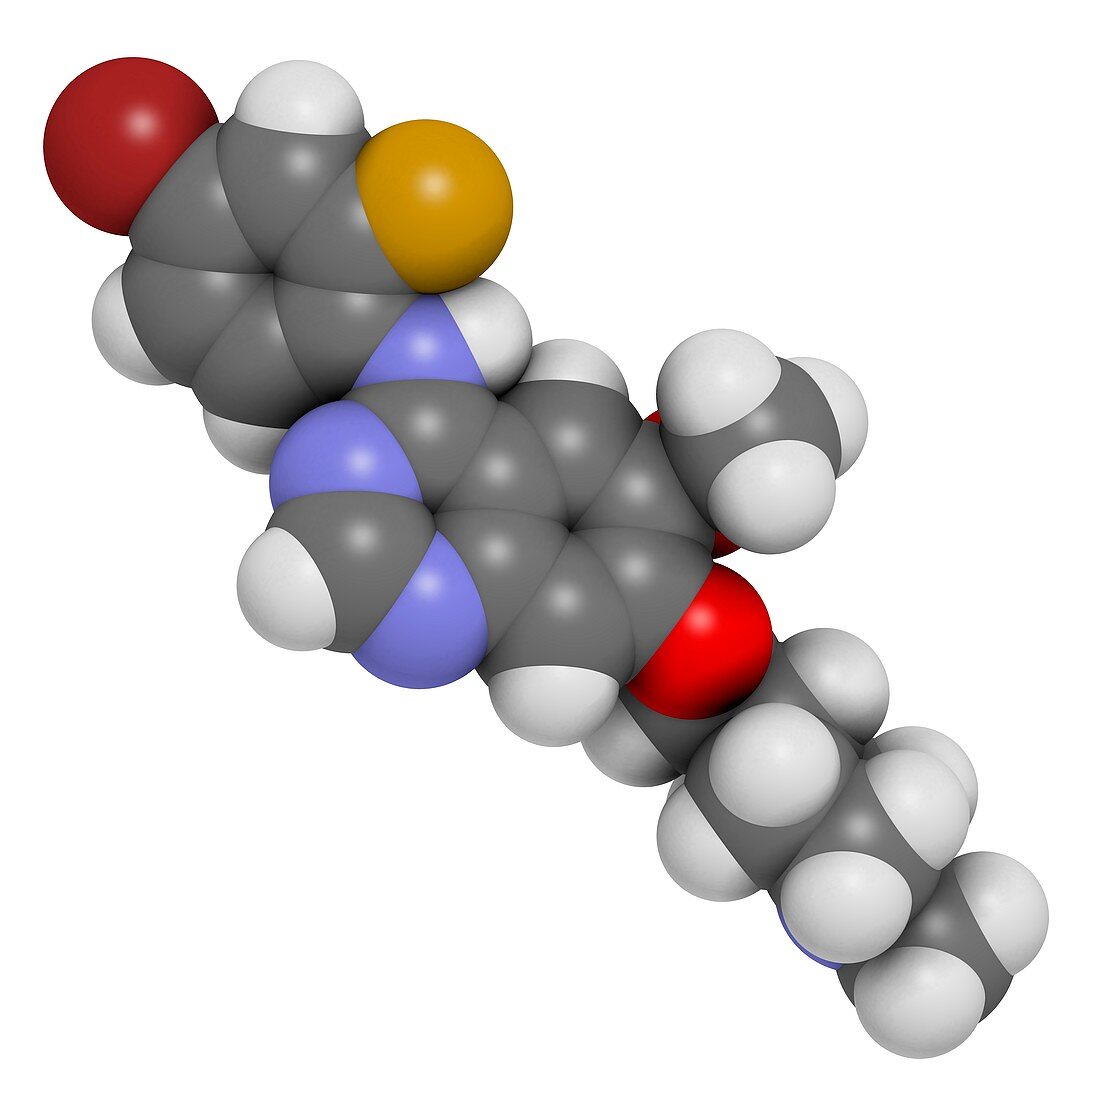 Vandetanib cancer drug molecule